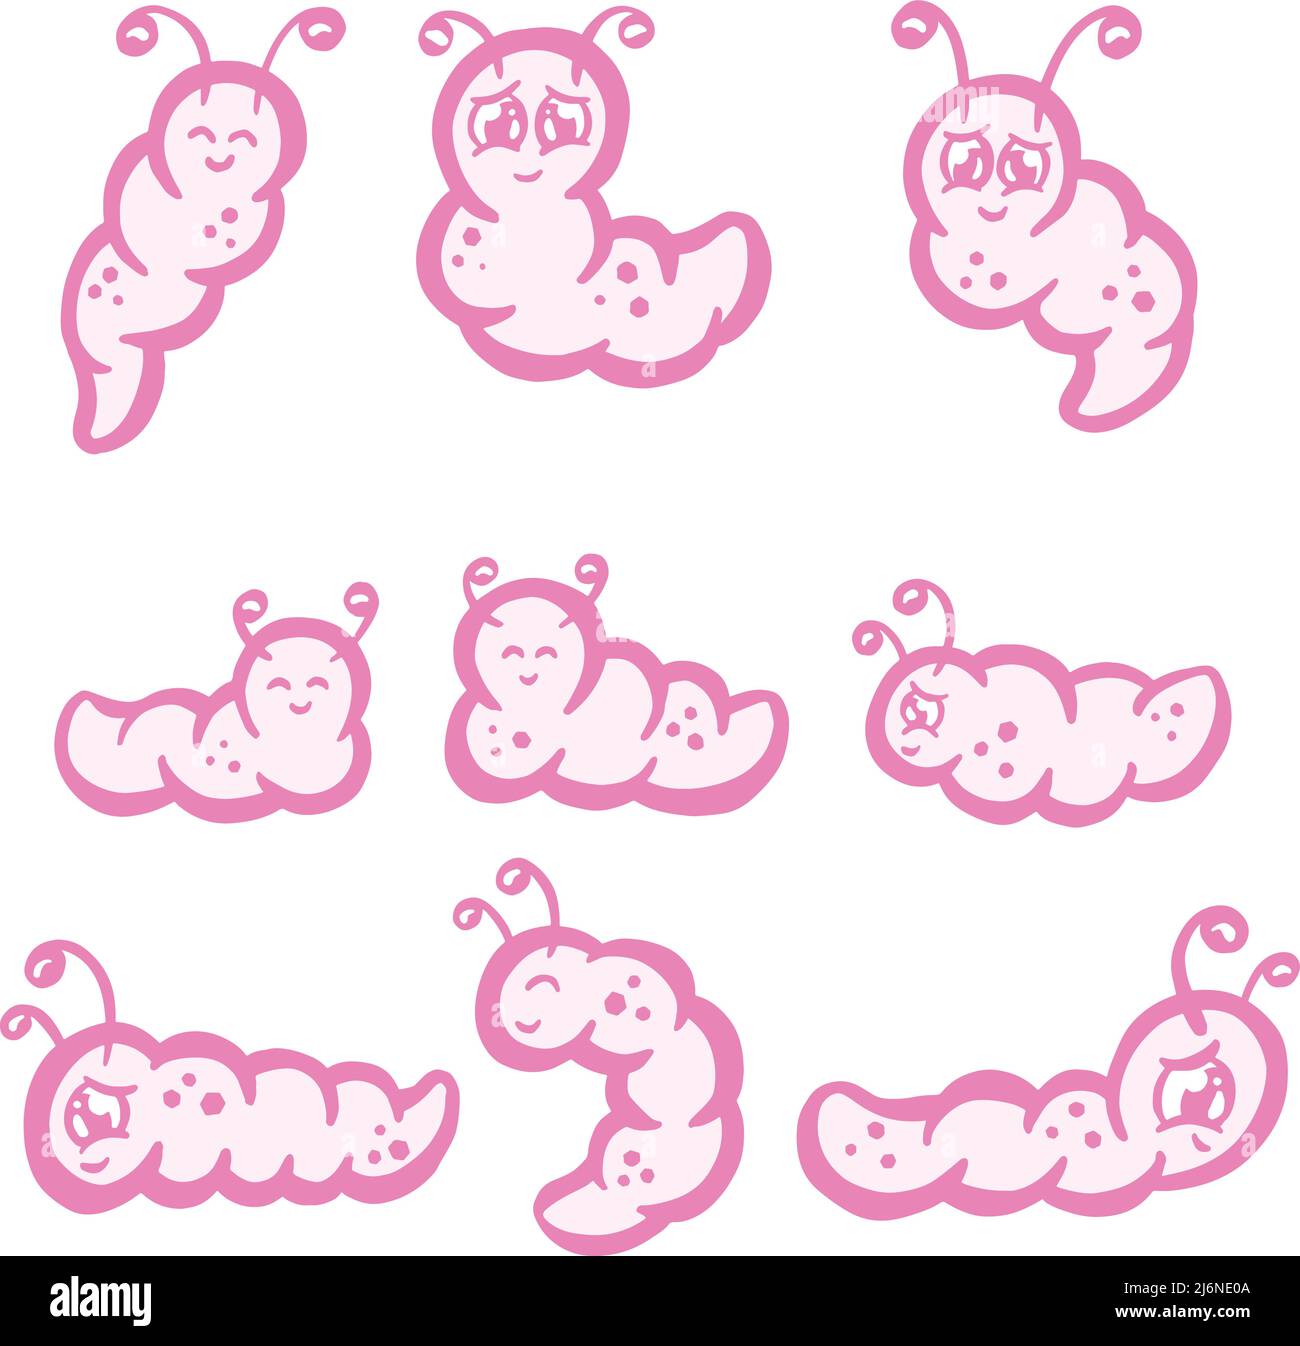 Wiggly Grub Caterpillar Type Cartoon Character Illustration Stock Vector